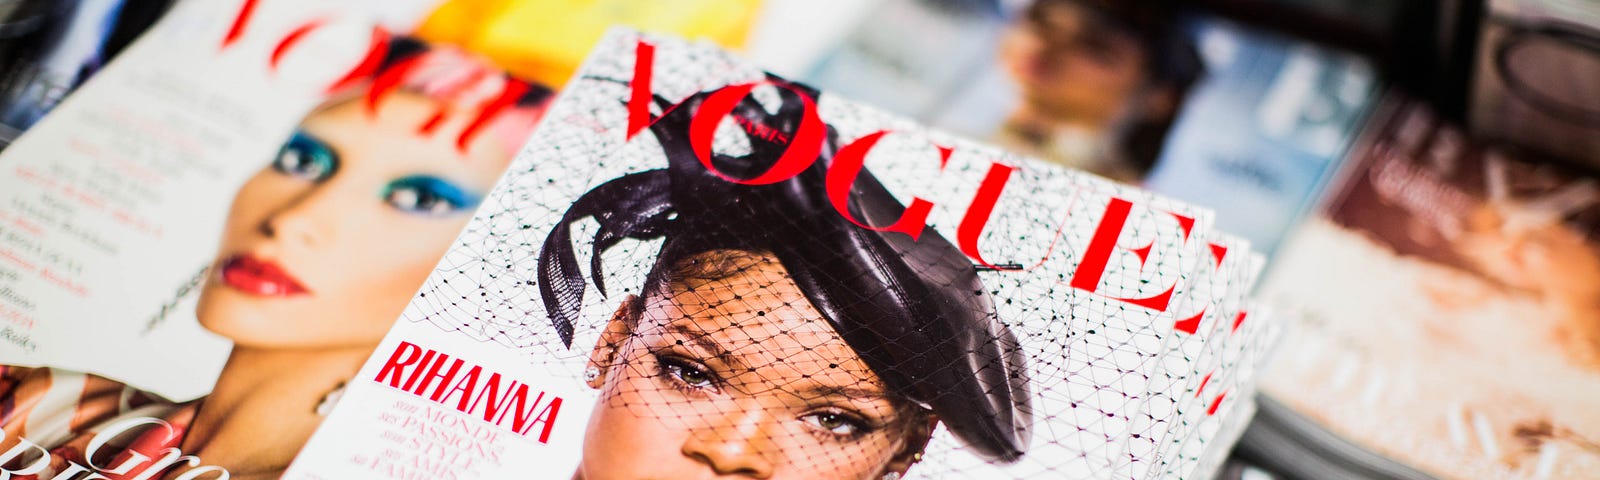 pic of Rihanna on Vogue magazine